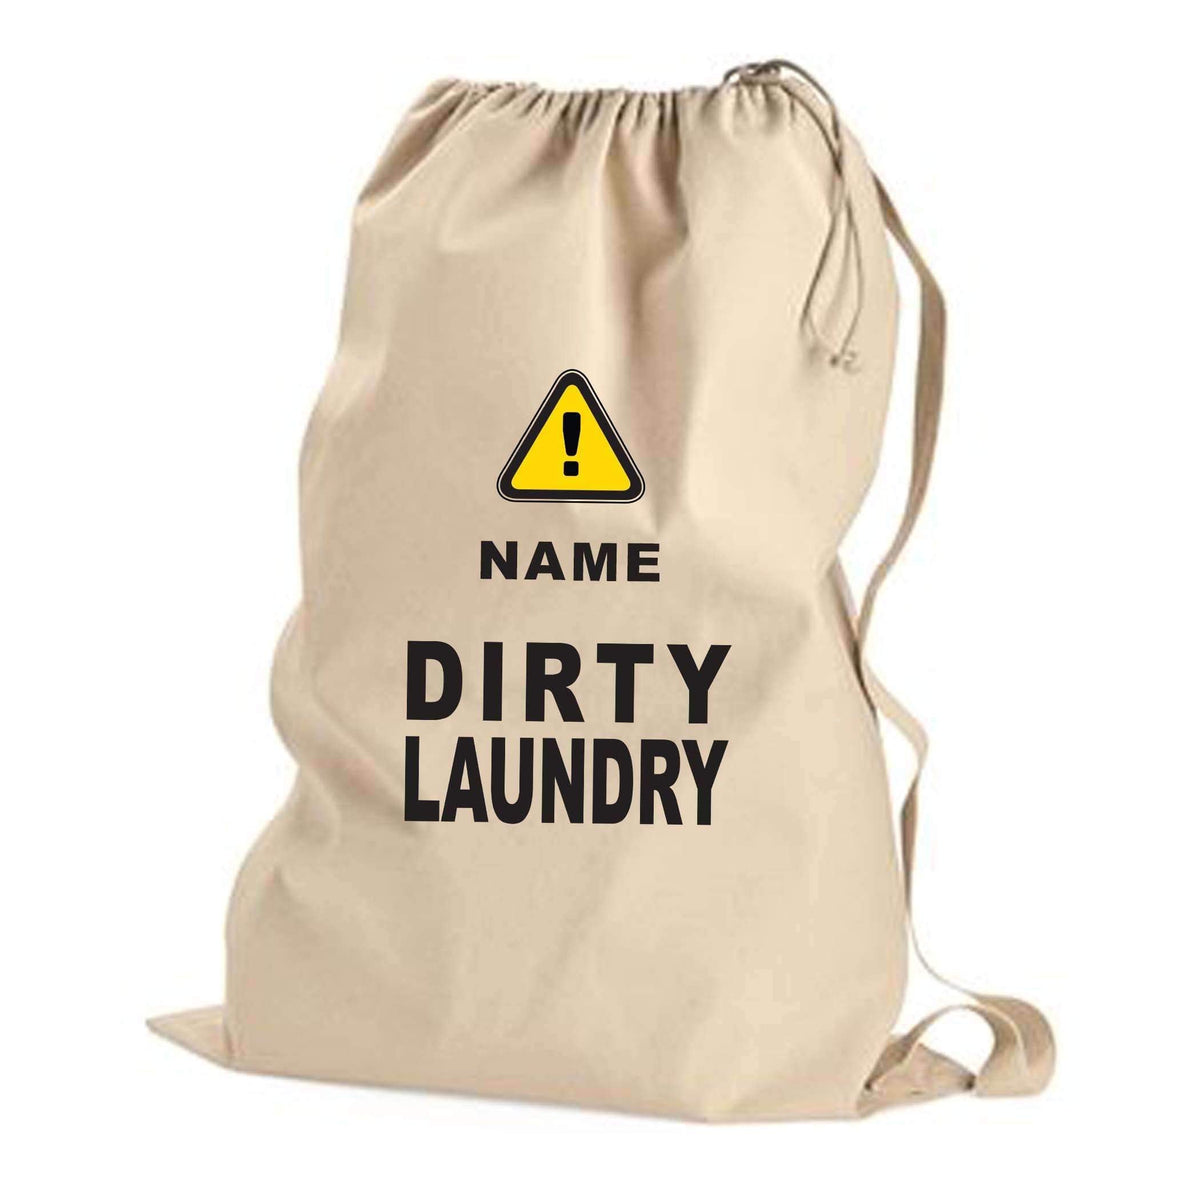 Dirty Laundry! Hazardous Laundry Bag with Name Added – Sockprints